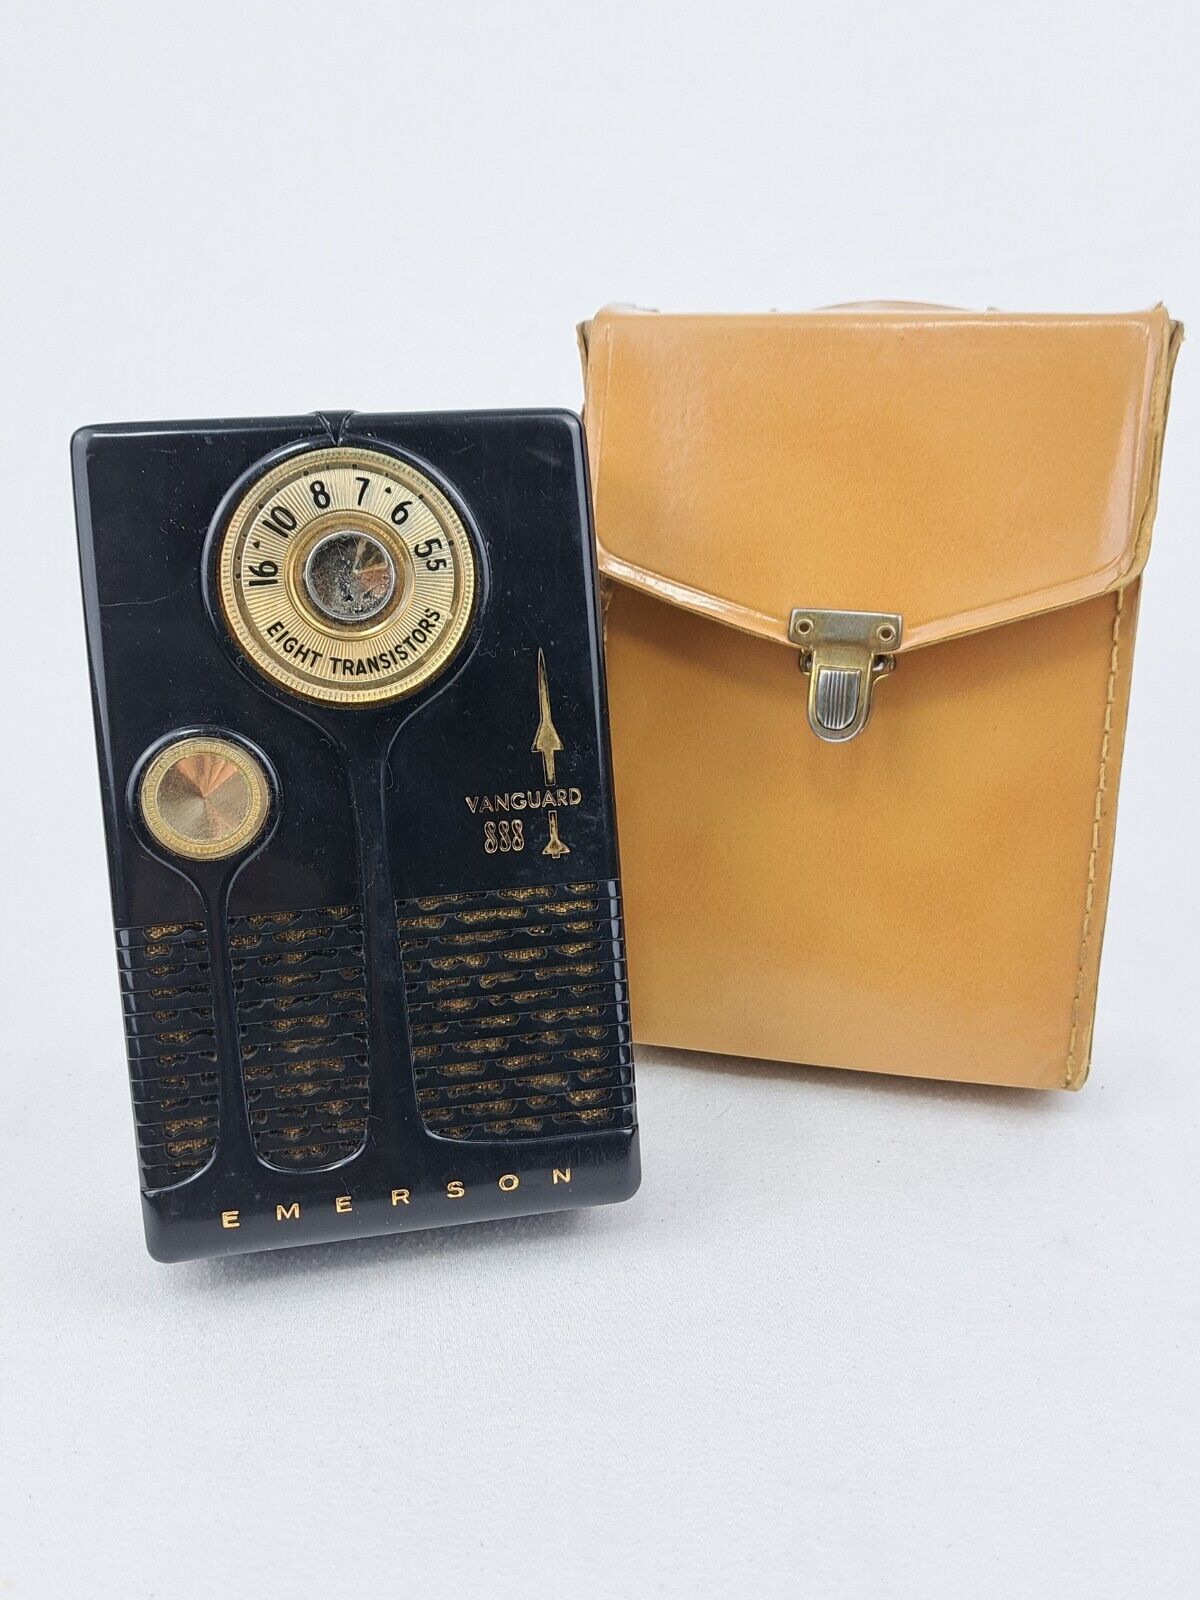 Emerson Vanguard 888 Nevabreak Transistor Radio Black w Tan Leather Case